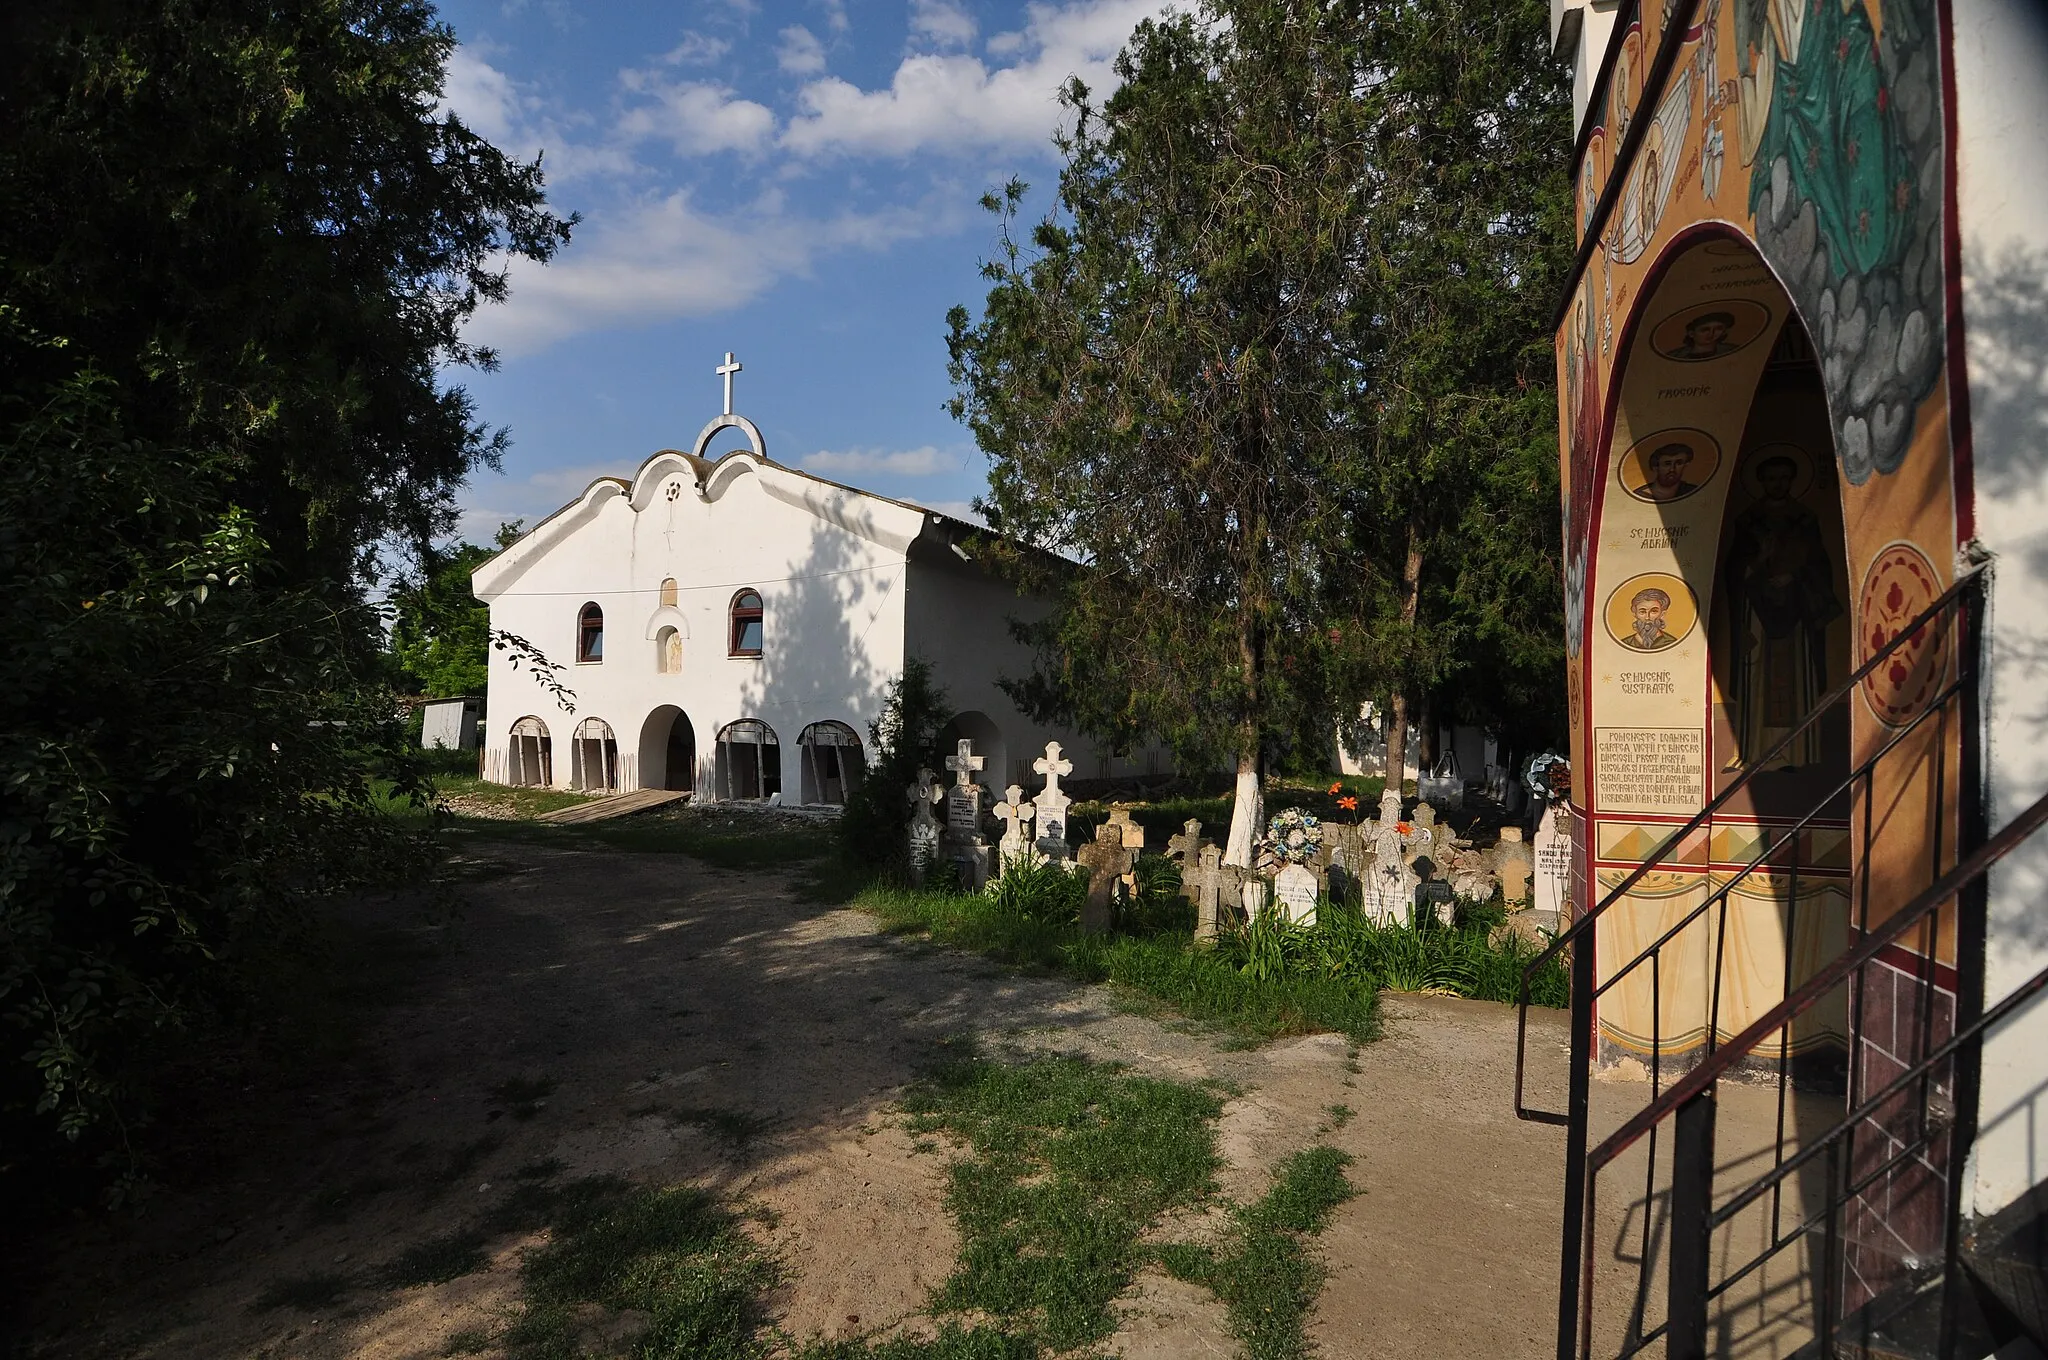 Photo showing: Holy Trinity - St. Nicholas 1860 orthodox church built by the Bulgarian community of Istria village, Constanta county, Dobruja region, Romania